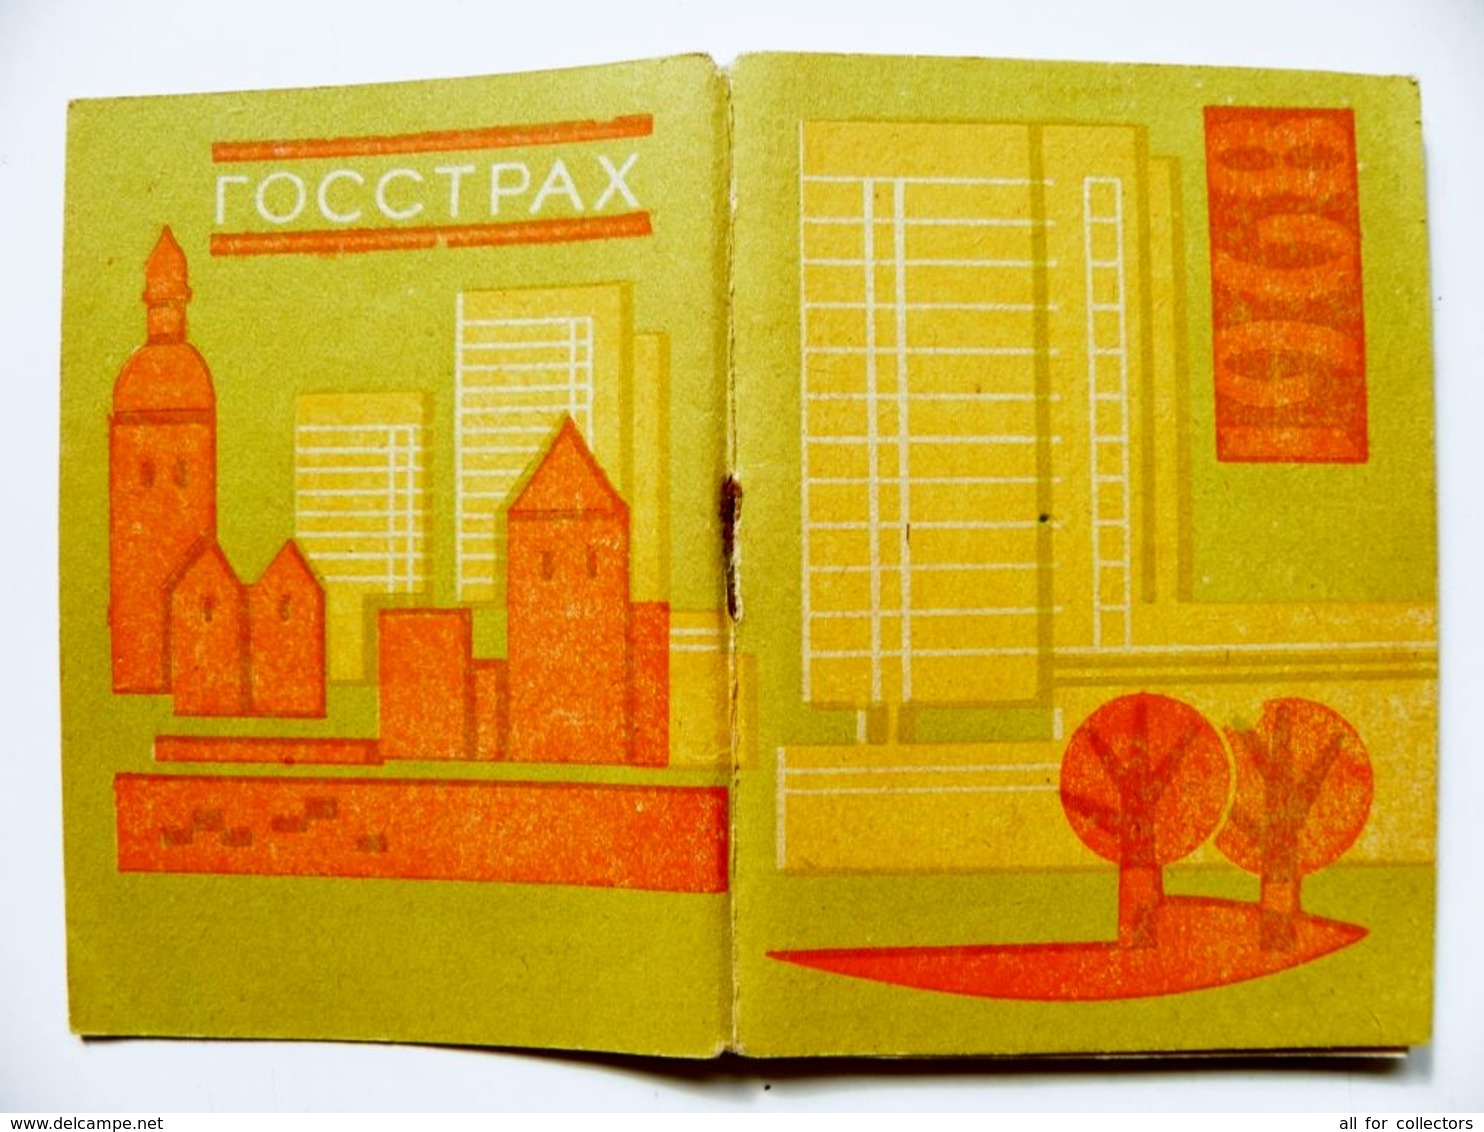 interesting small calendar booklet 1968 year from ussr Latvia gosstrah 7x10cm